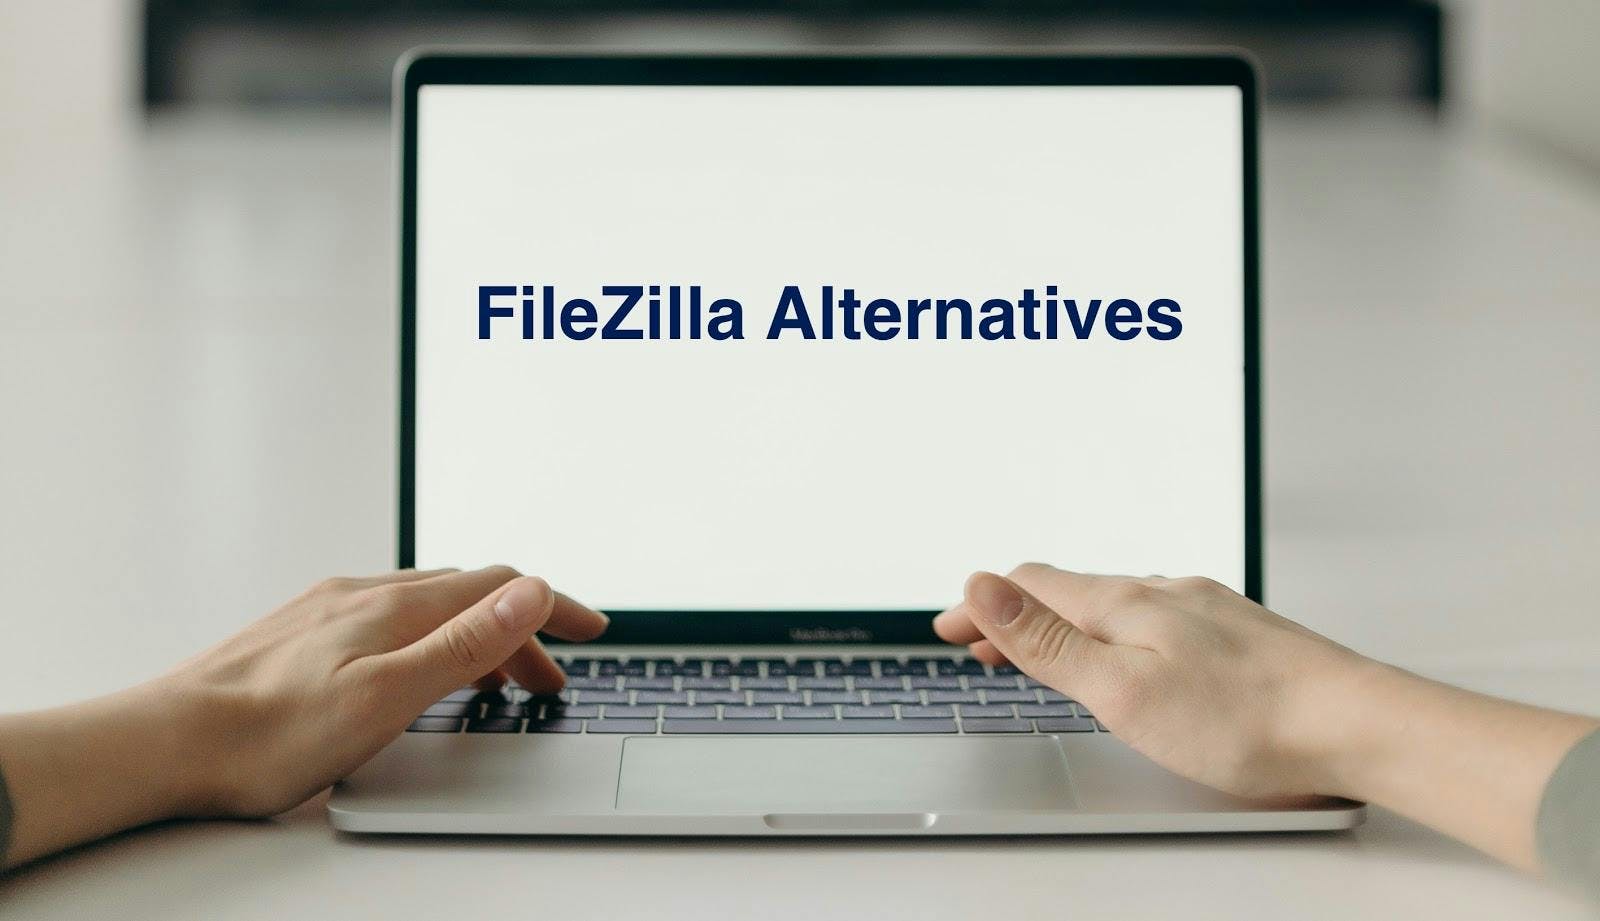 FileZilla Alternatives on computer screen.